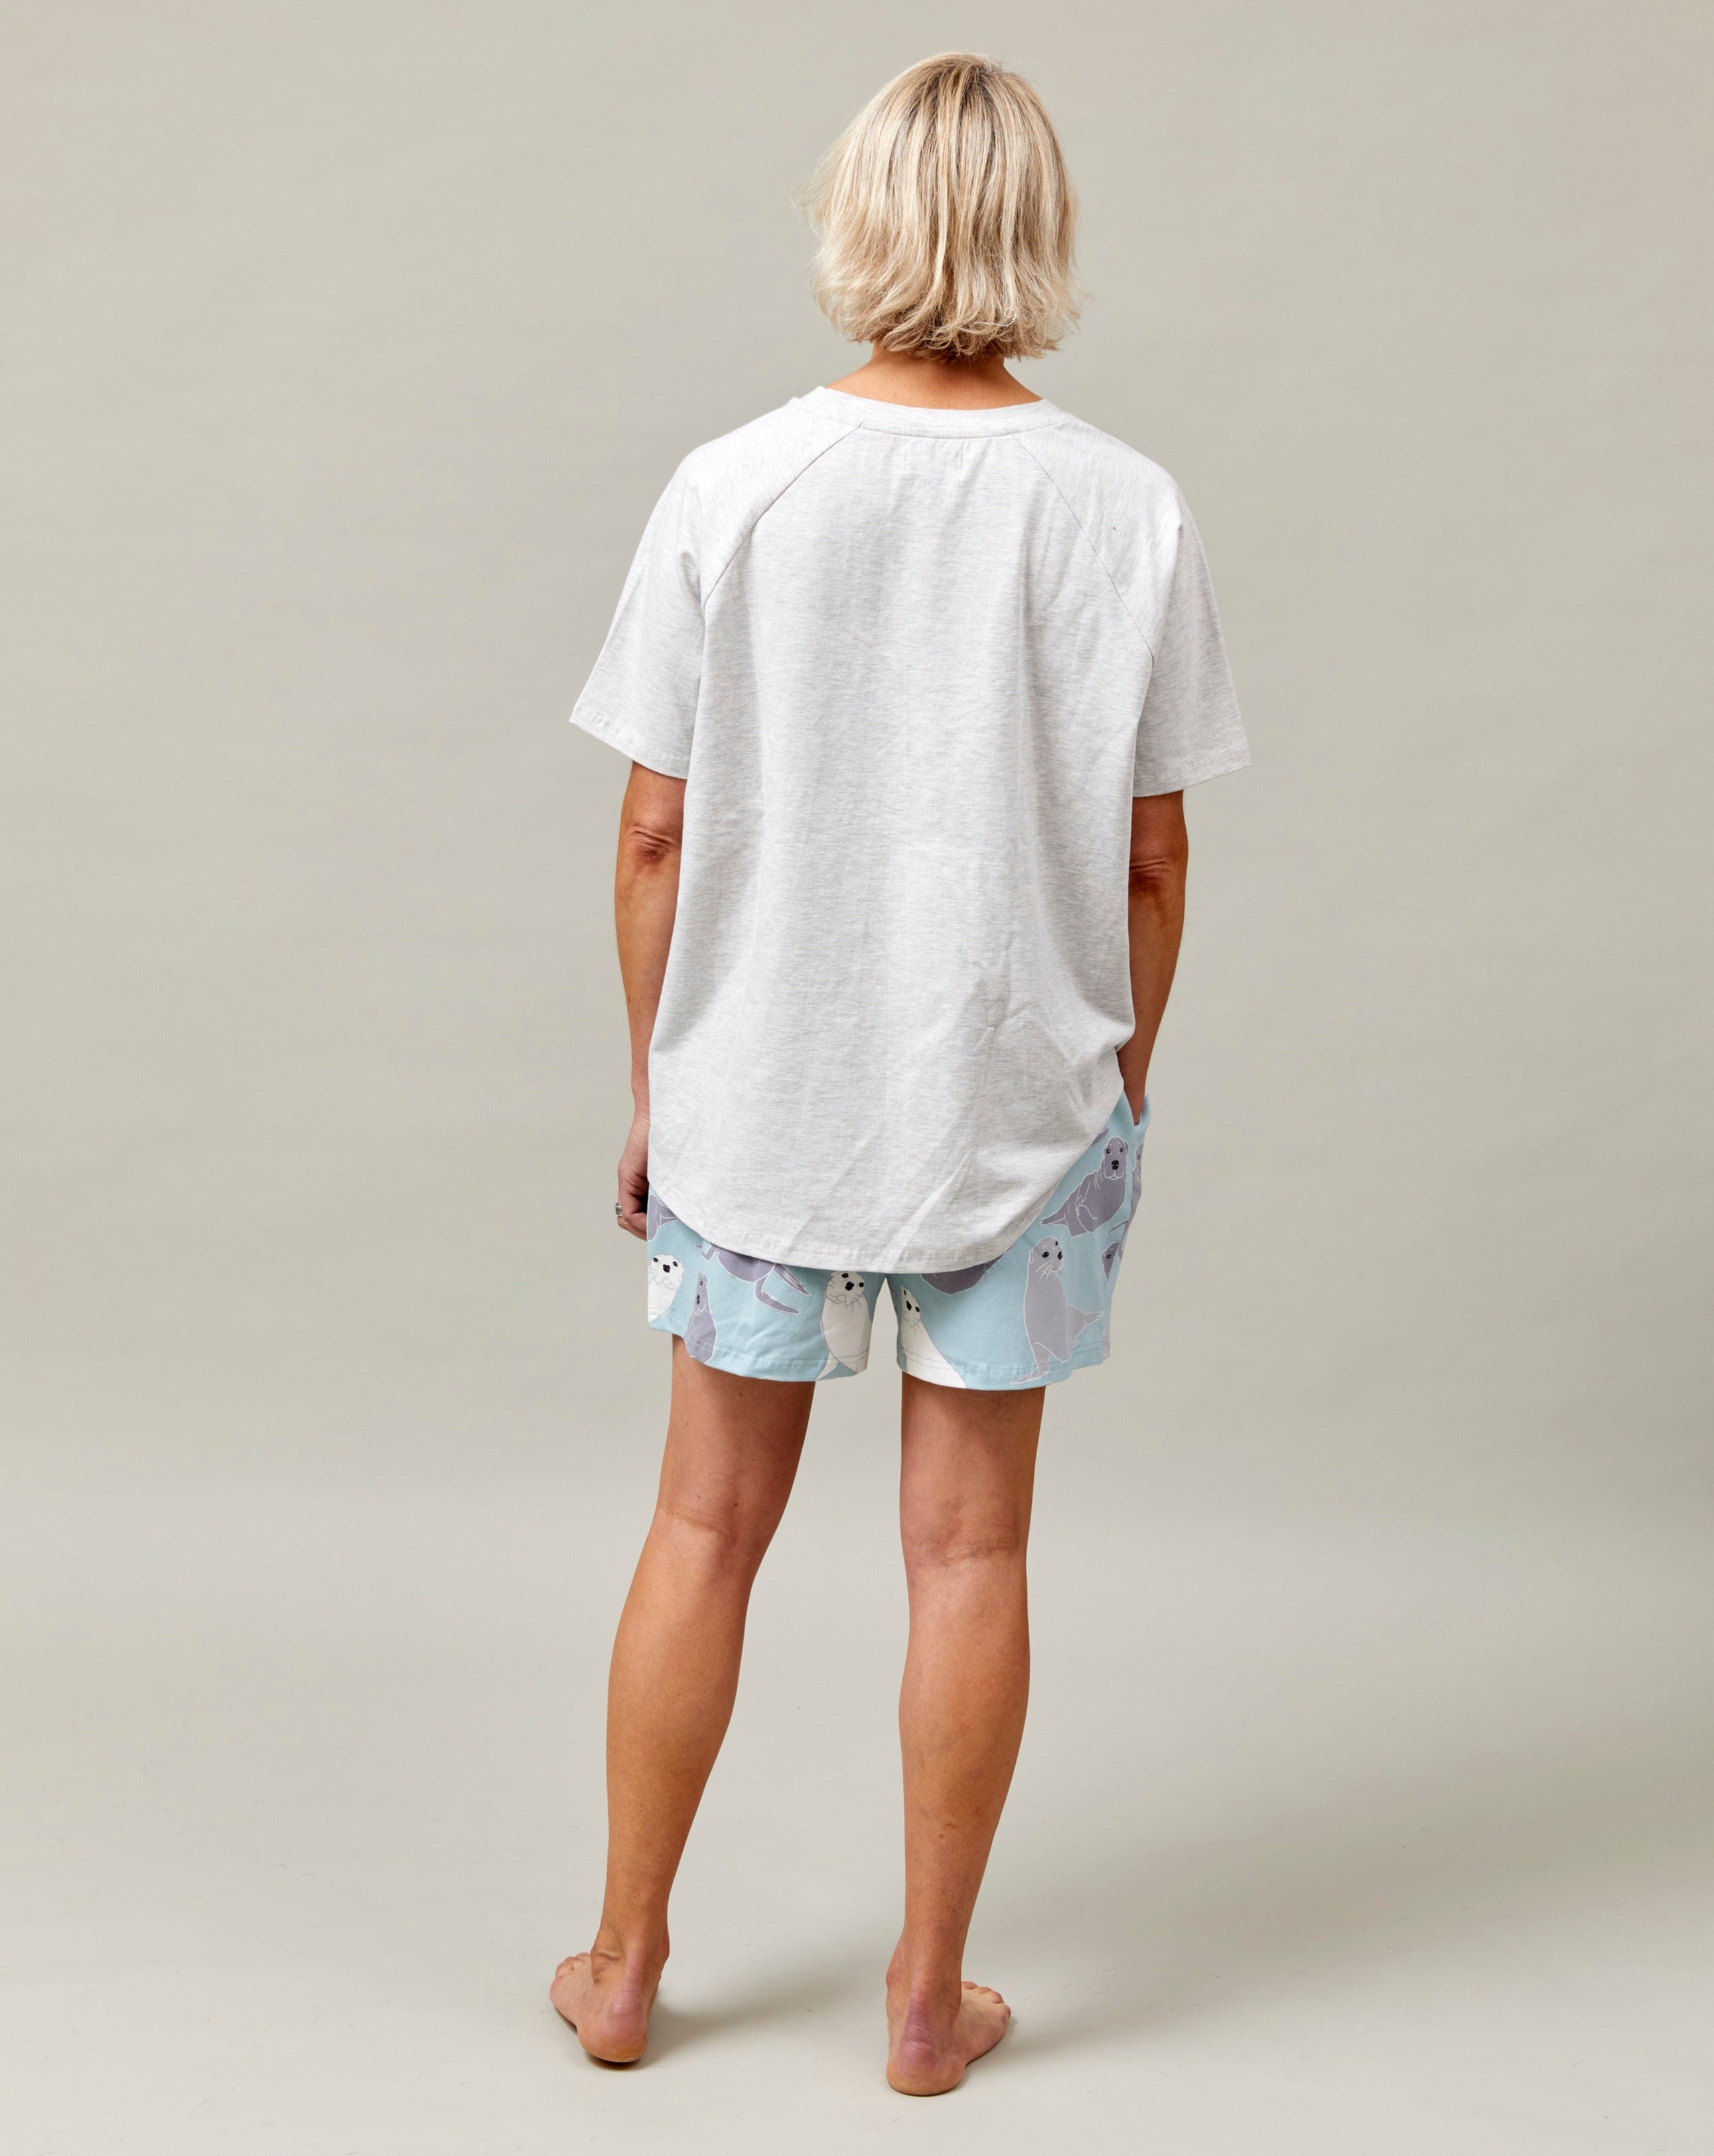 Sealy Staffies Women’s Short Pyjama Set.